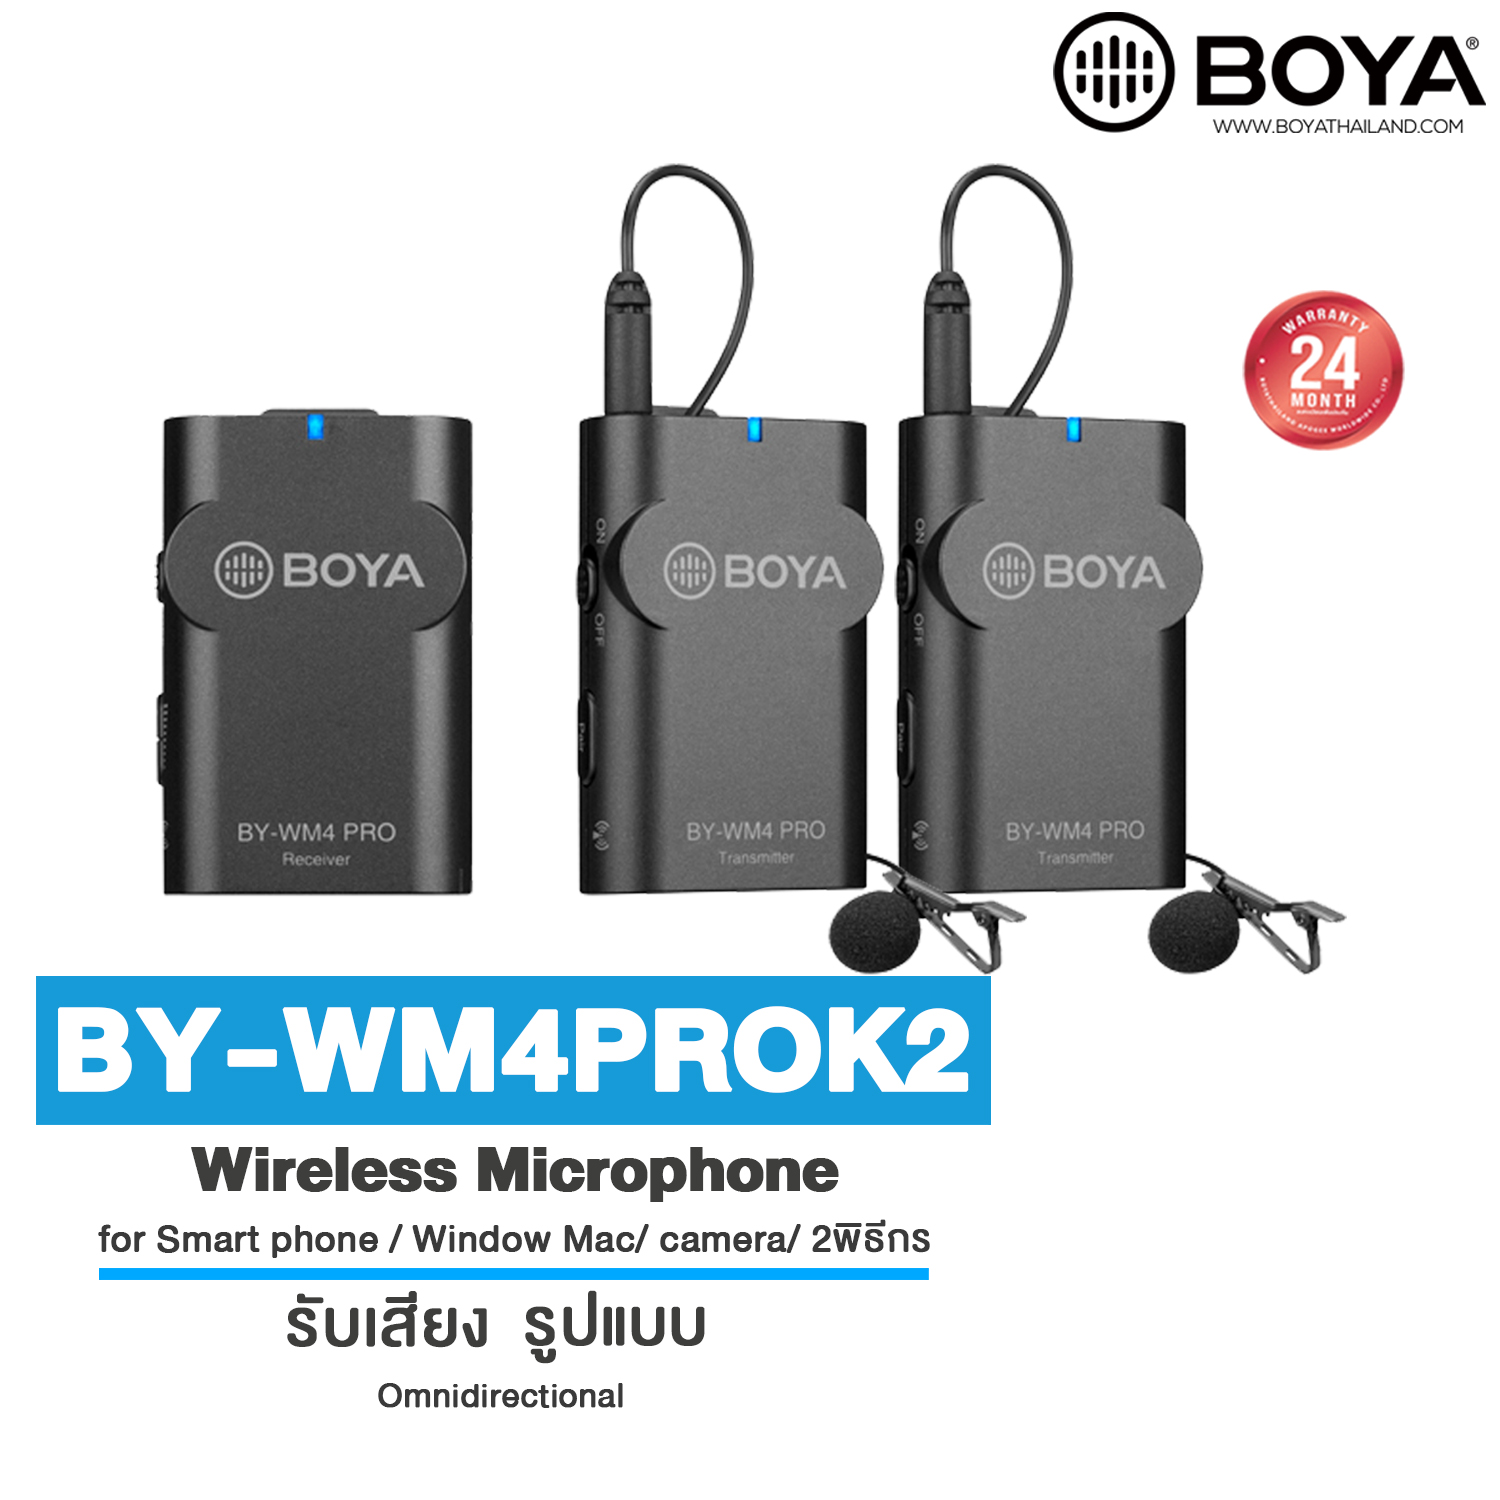 BOYA BY-WM4 PRO K2 Dual Wireless Microphone